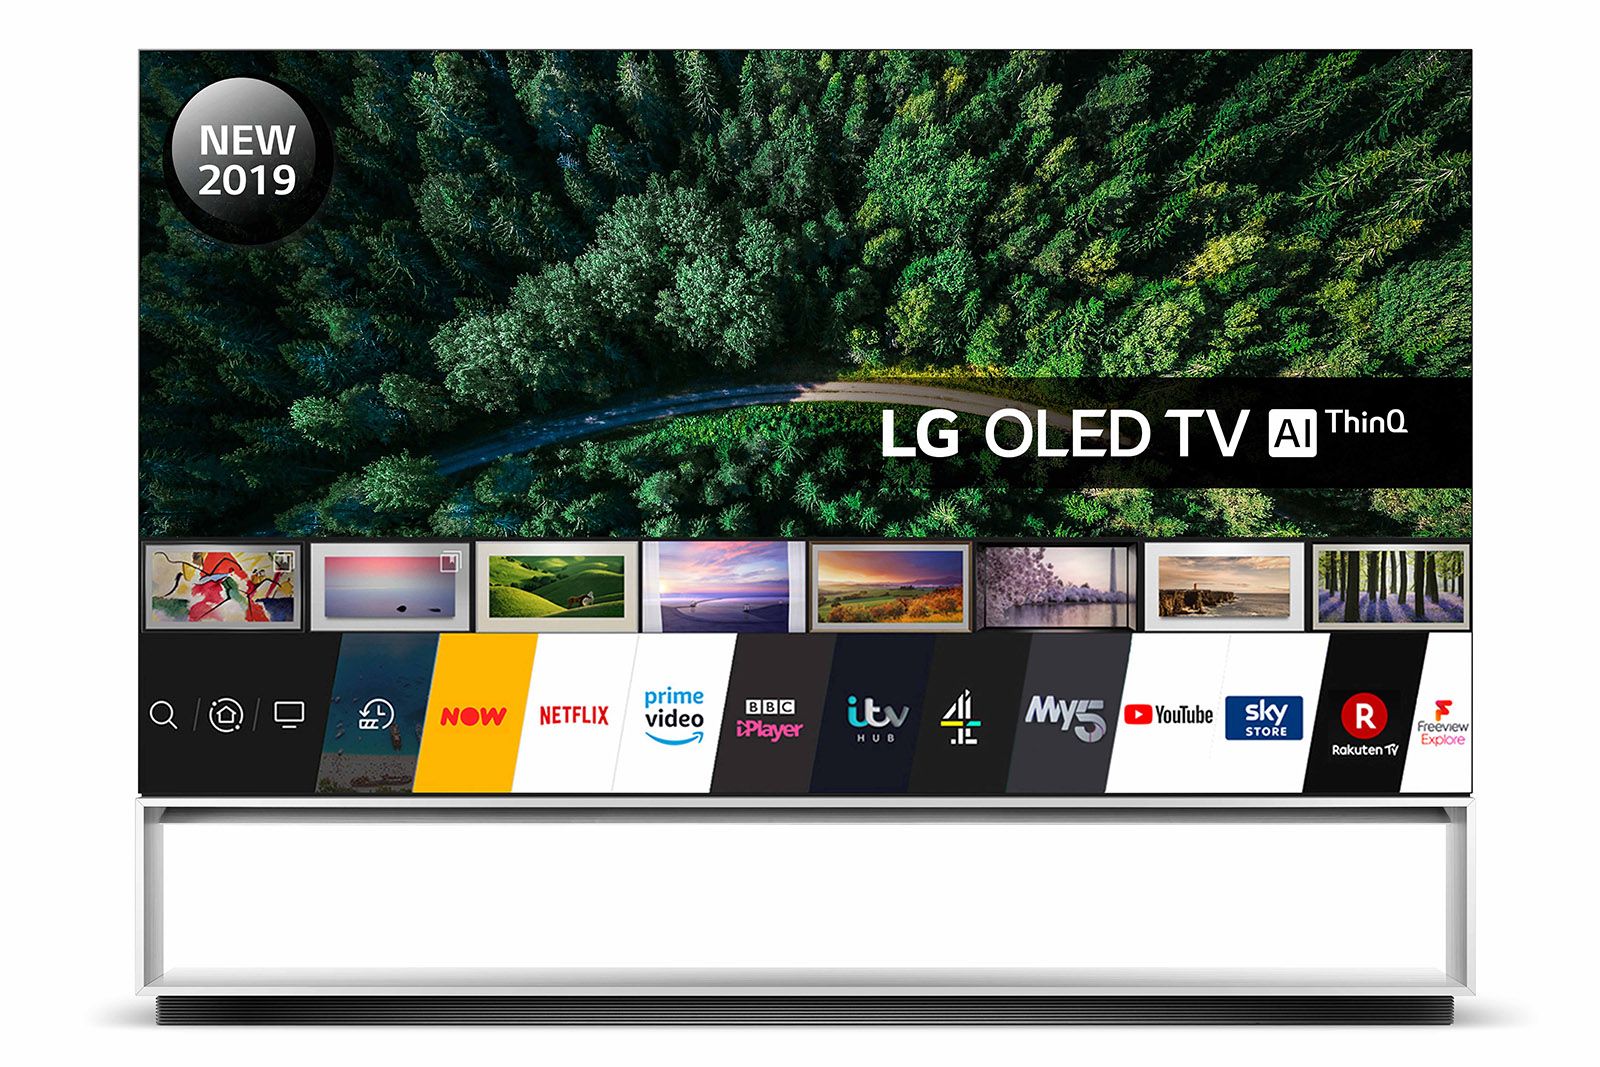 LG Z9 8K OLED TV review image 5